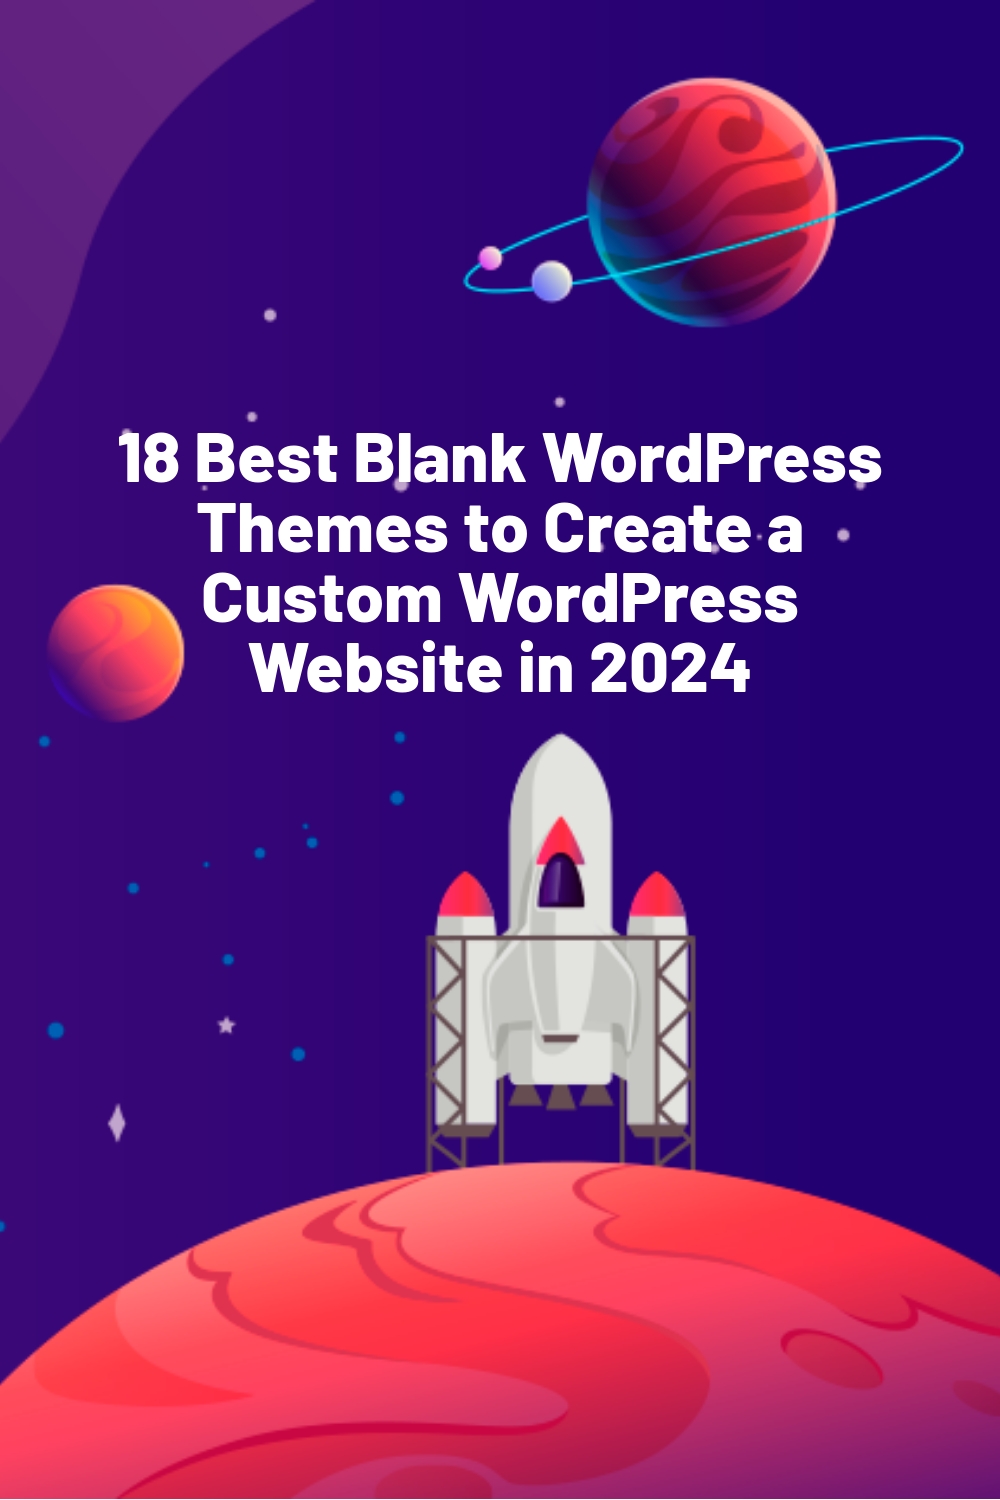 18 Best Blank WordPress Themes to Create a Custom WordPress Website in 2024